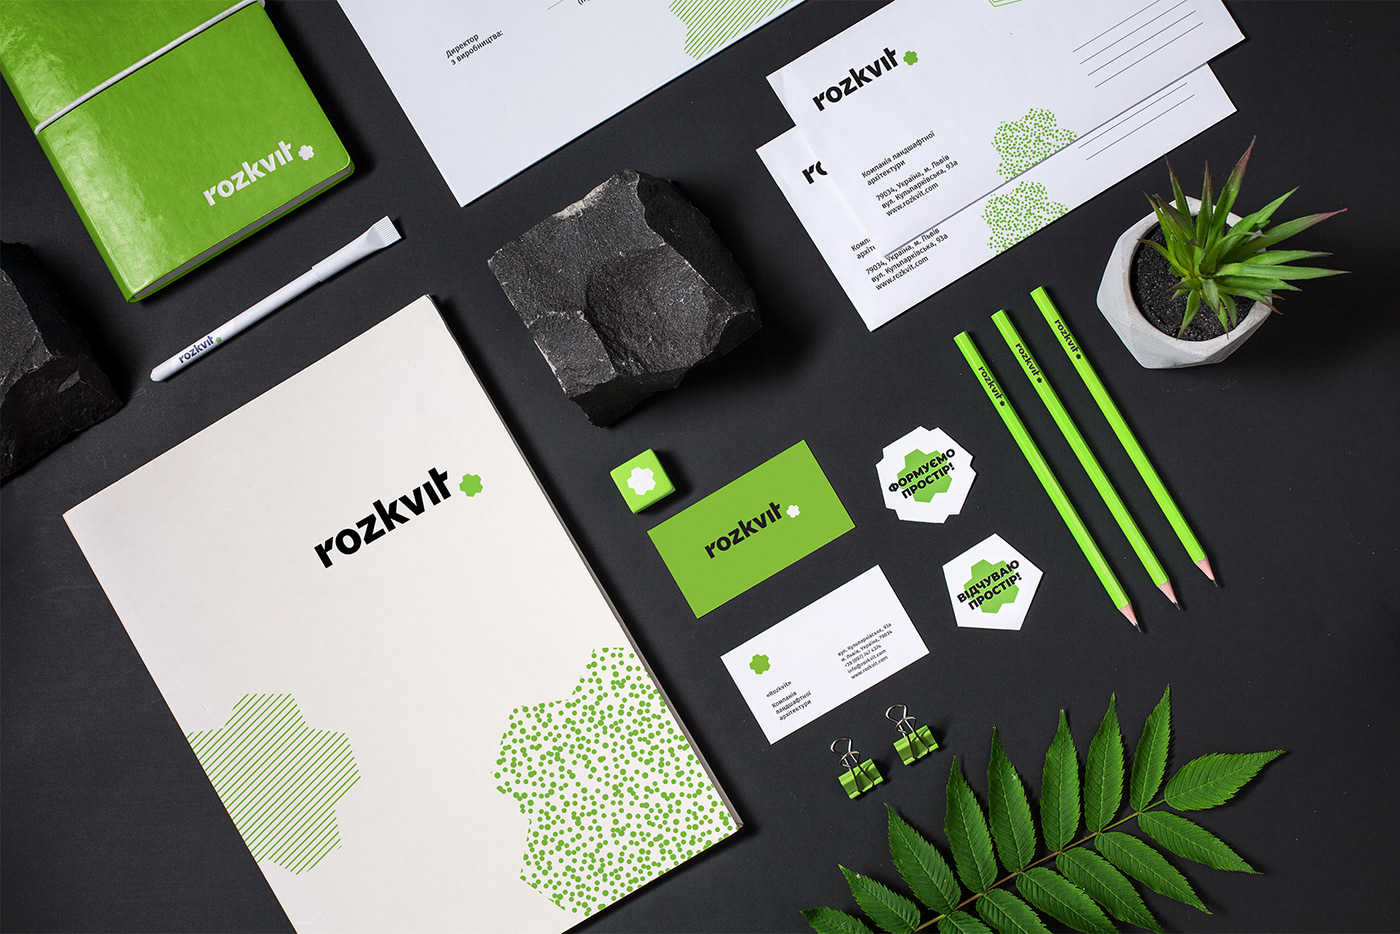 rozkvit Landscape architecture brand identity logo design graphic Vataga agency